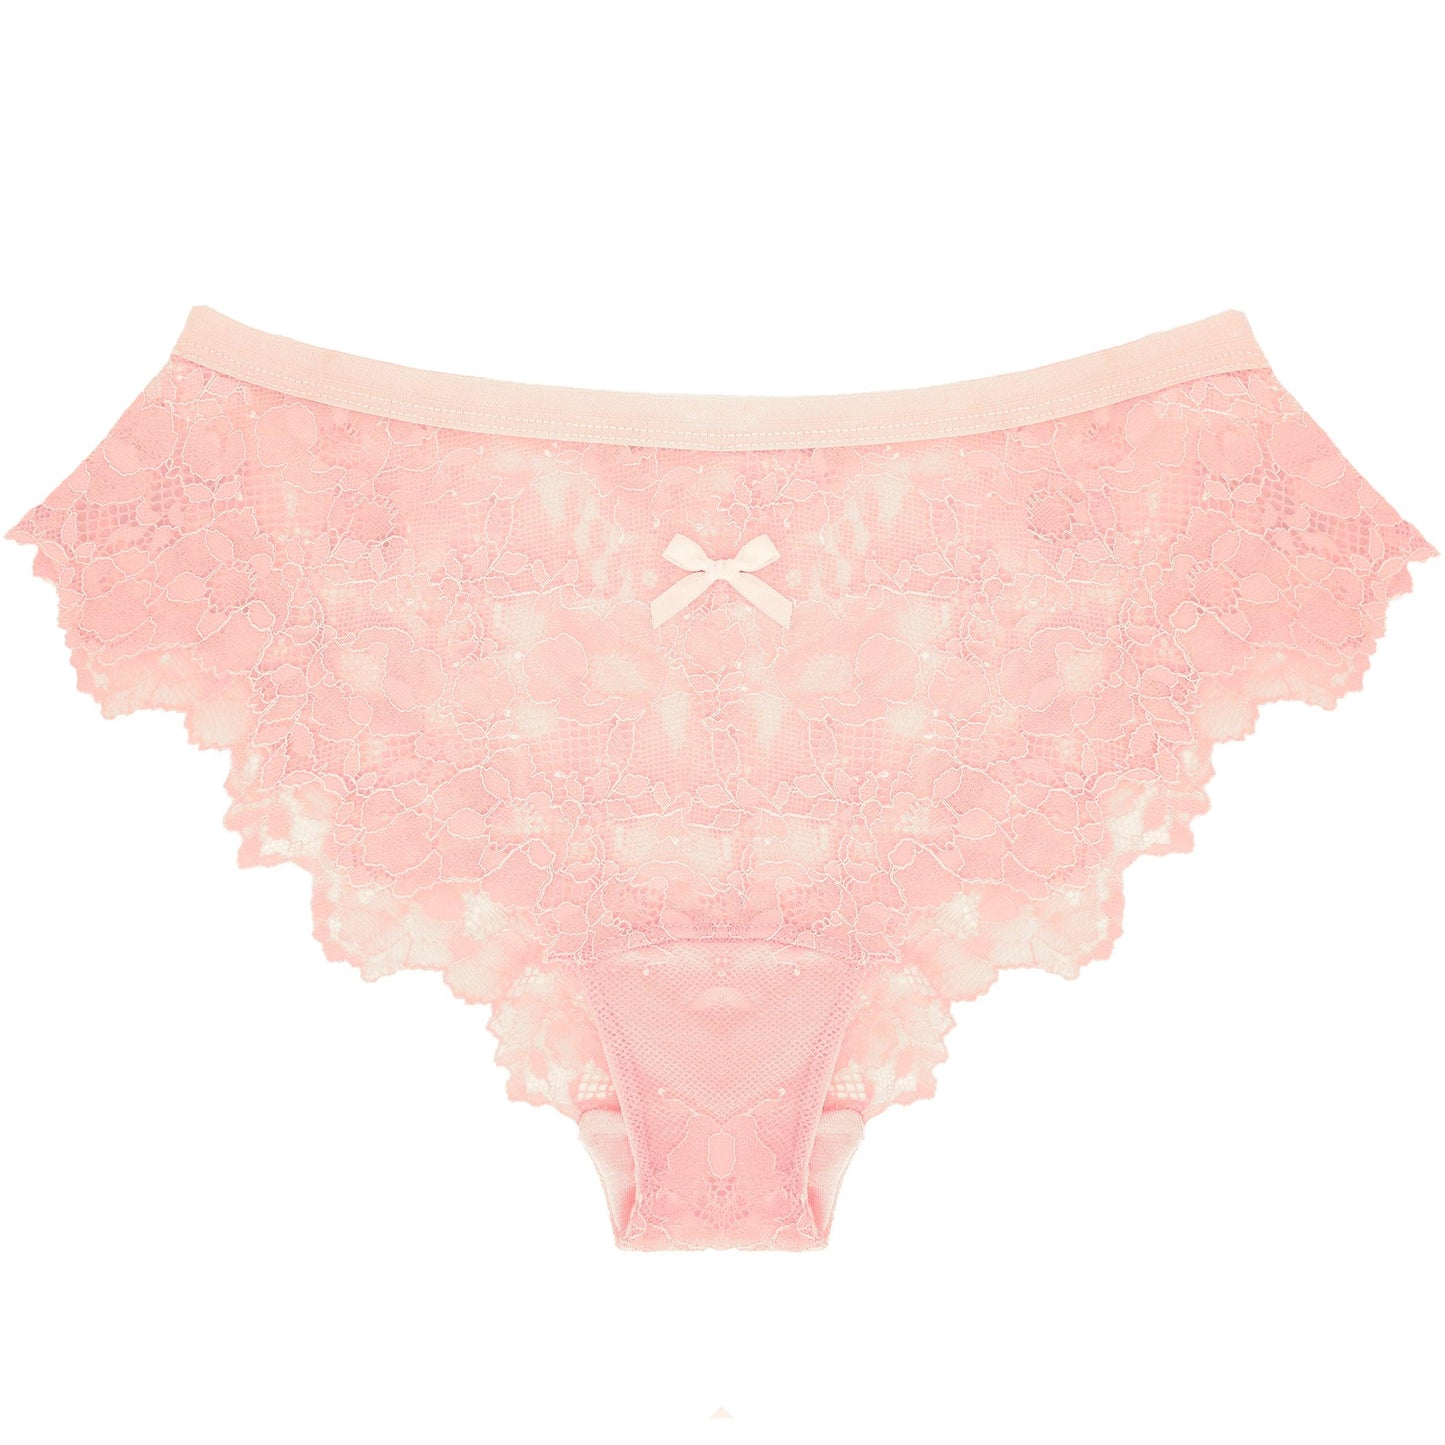 Lace Panty in Autumn Blush - Takkleberry